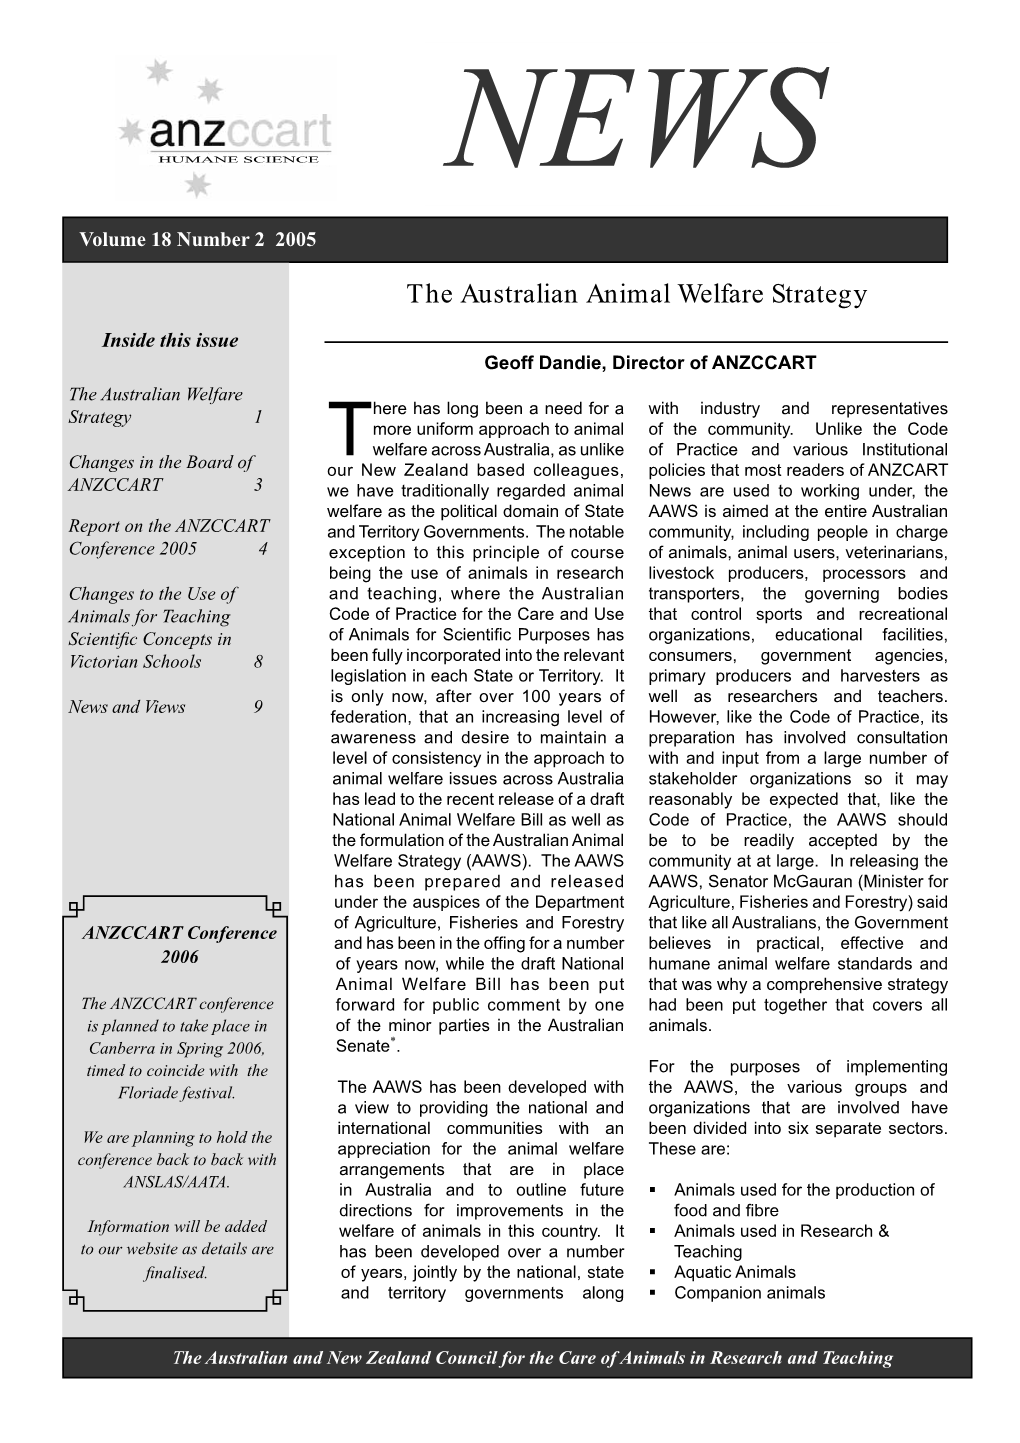 The Australian Animal Welfare Strategy